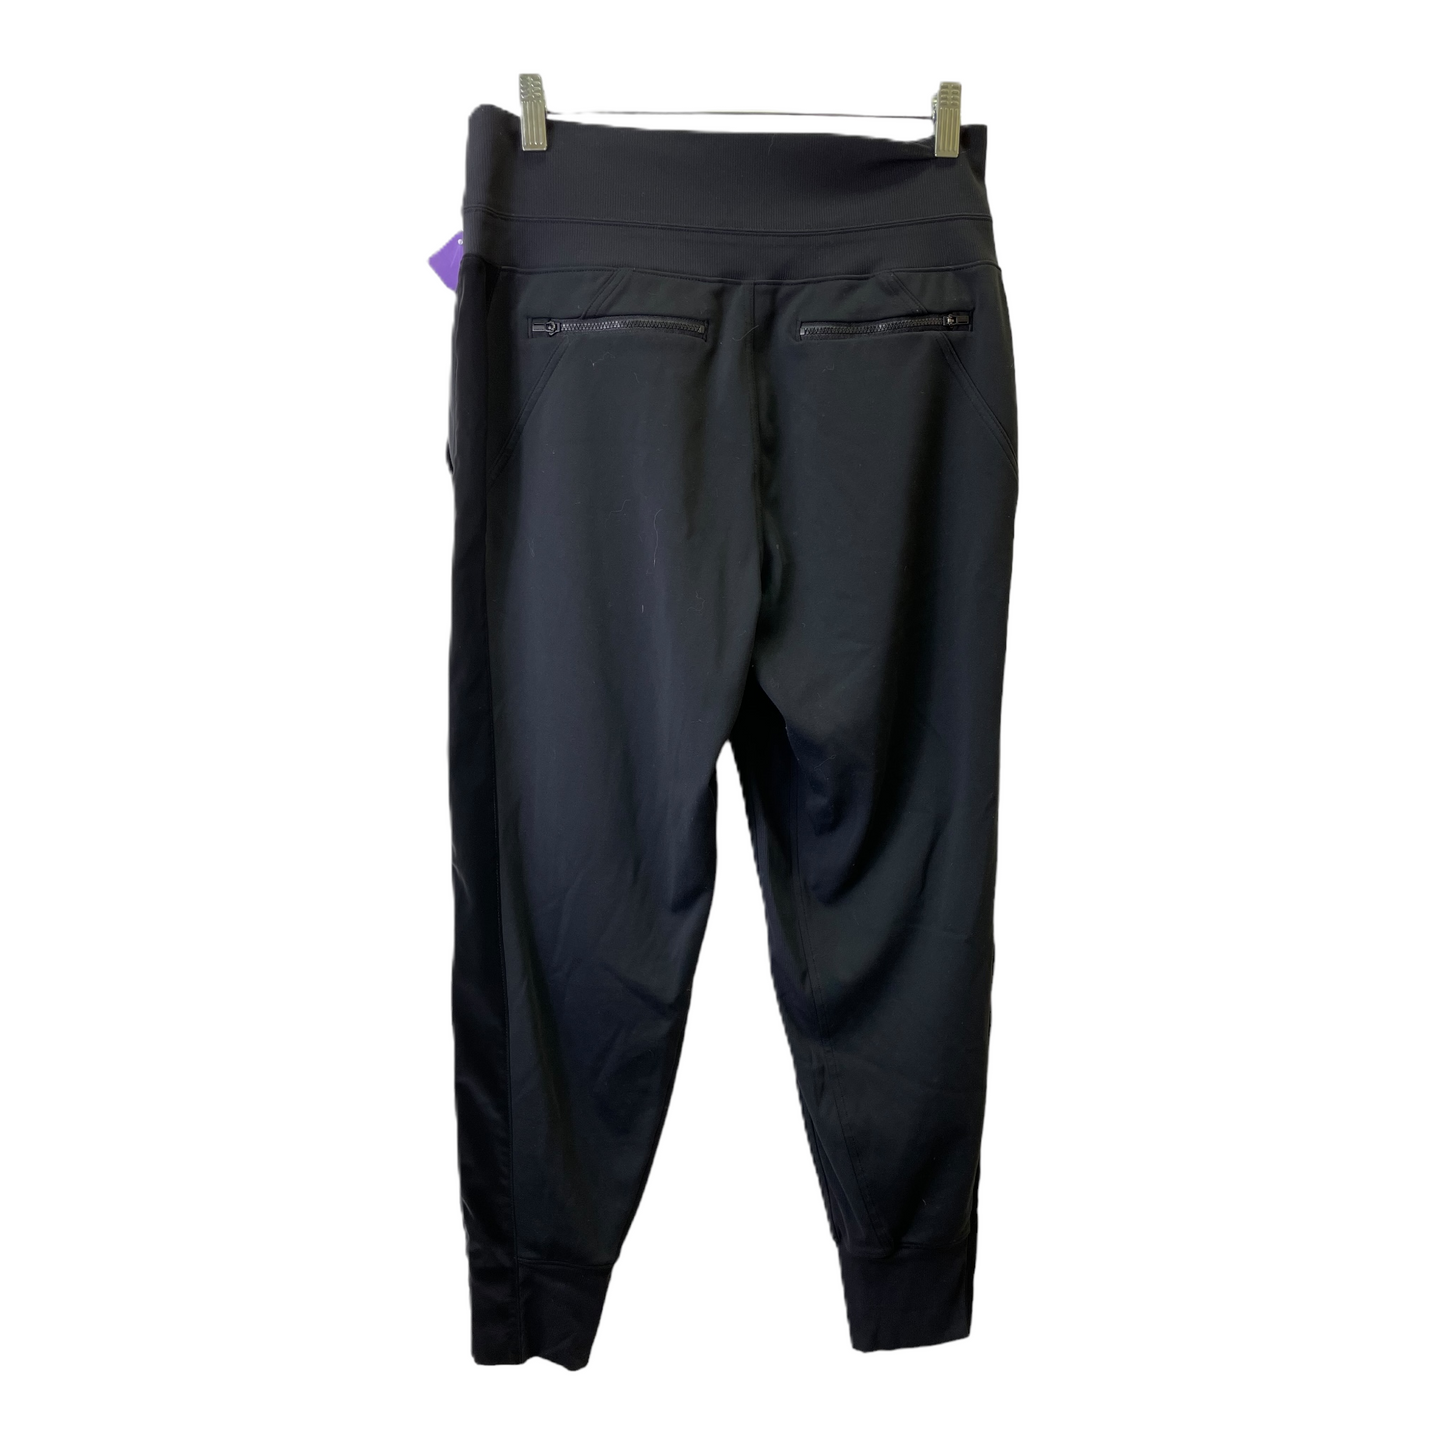 Black Athletic Pants By Athleta, Size: M